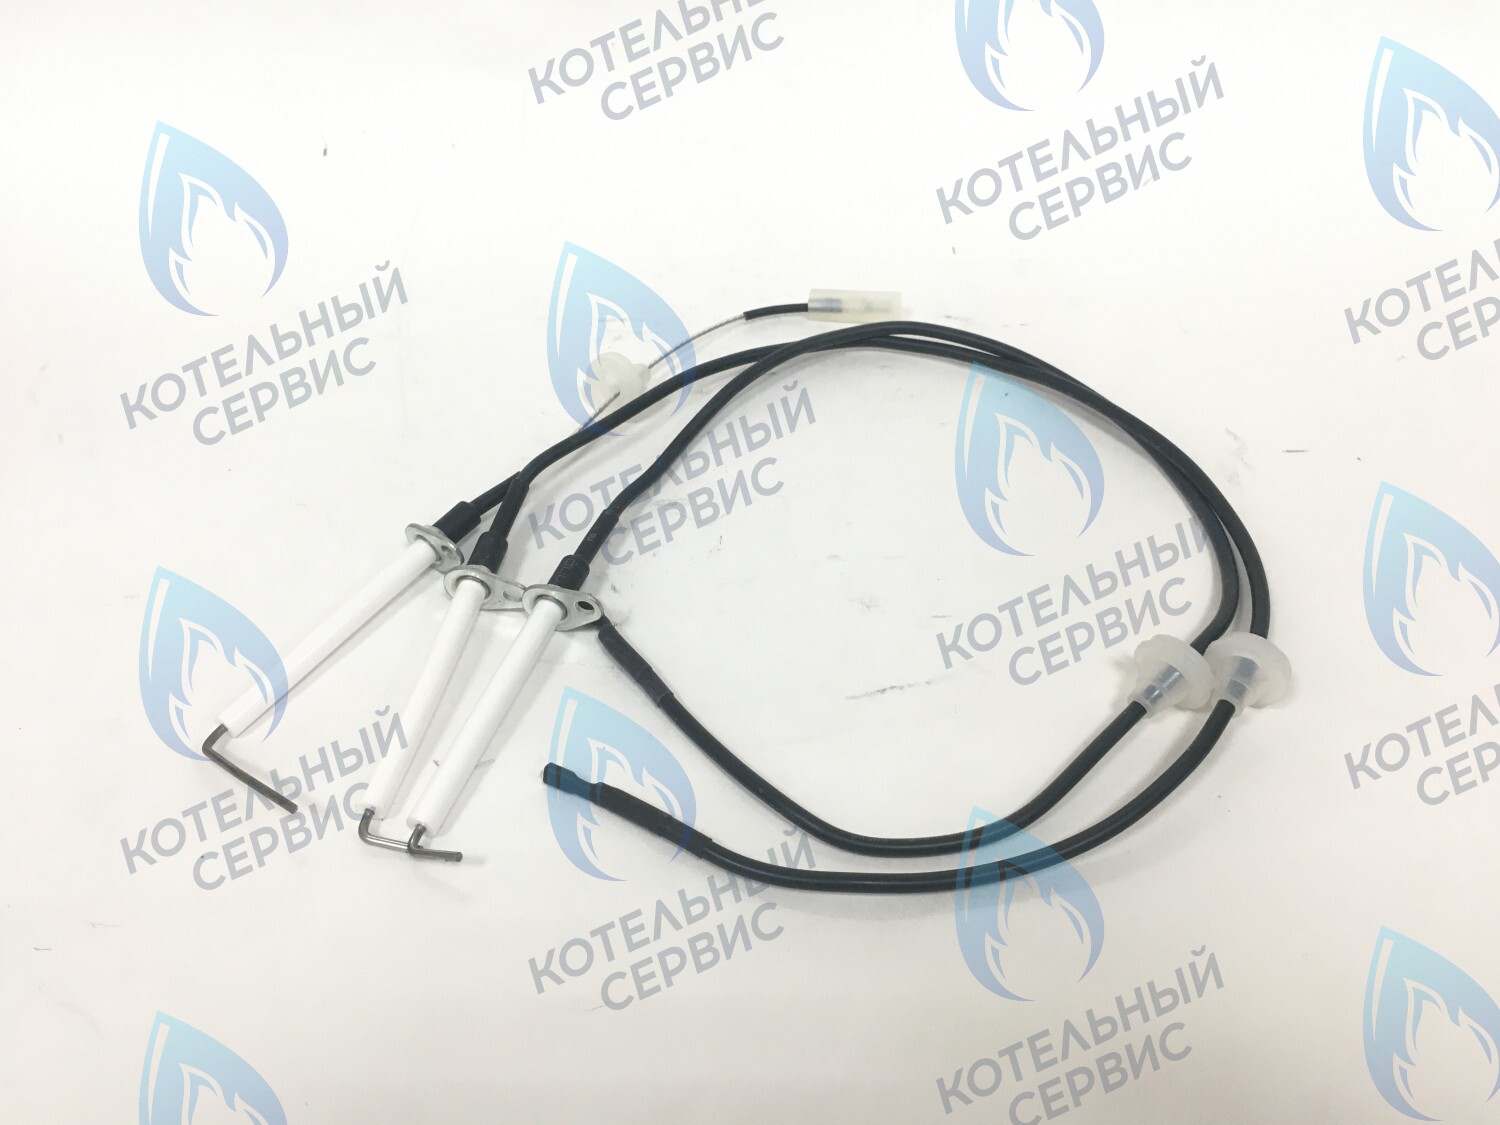 IE025-Комп Комплект электродов с кабелями для котлов GAZECO 18 С1/С2/Т1/Т2, 24 С1/С2/Т1/Т2 произв. после 2012 г. 05-4023 в Москве